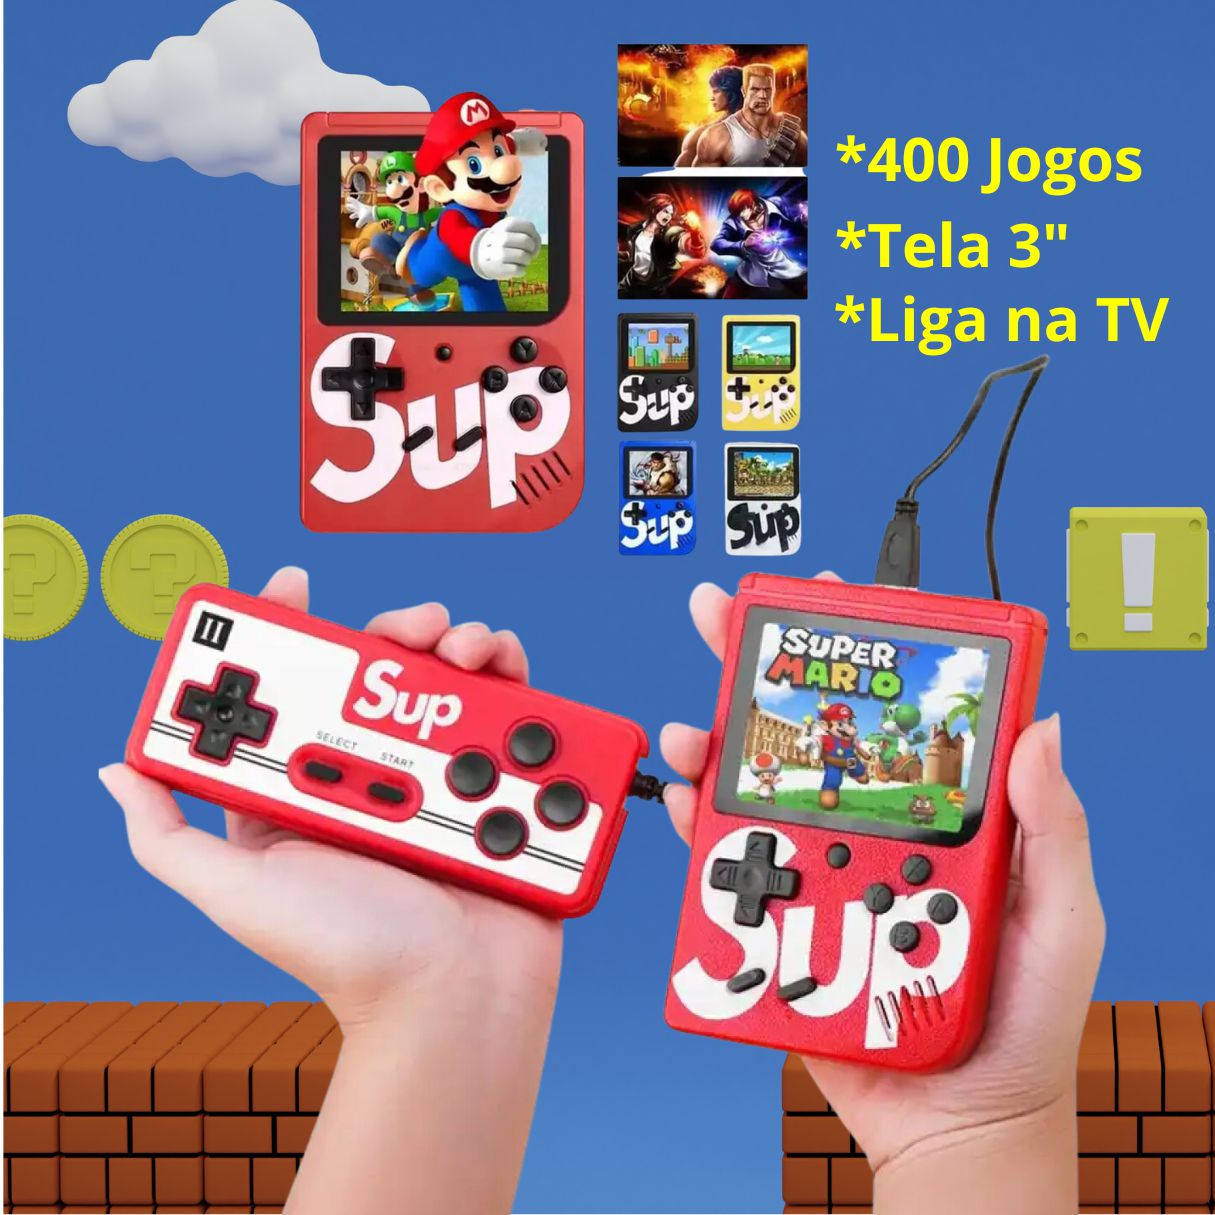 Tv Jogos, Jogos do Mario